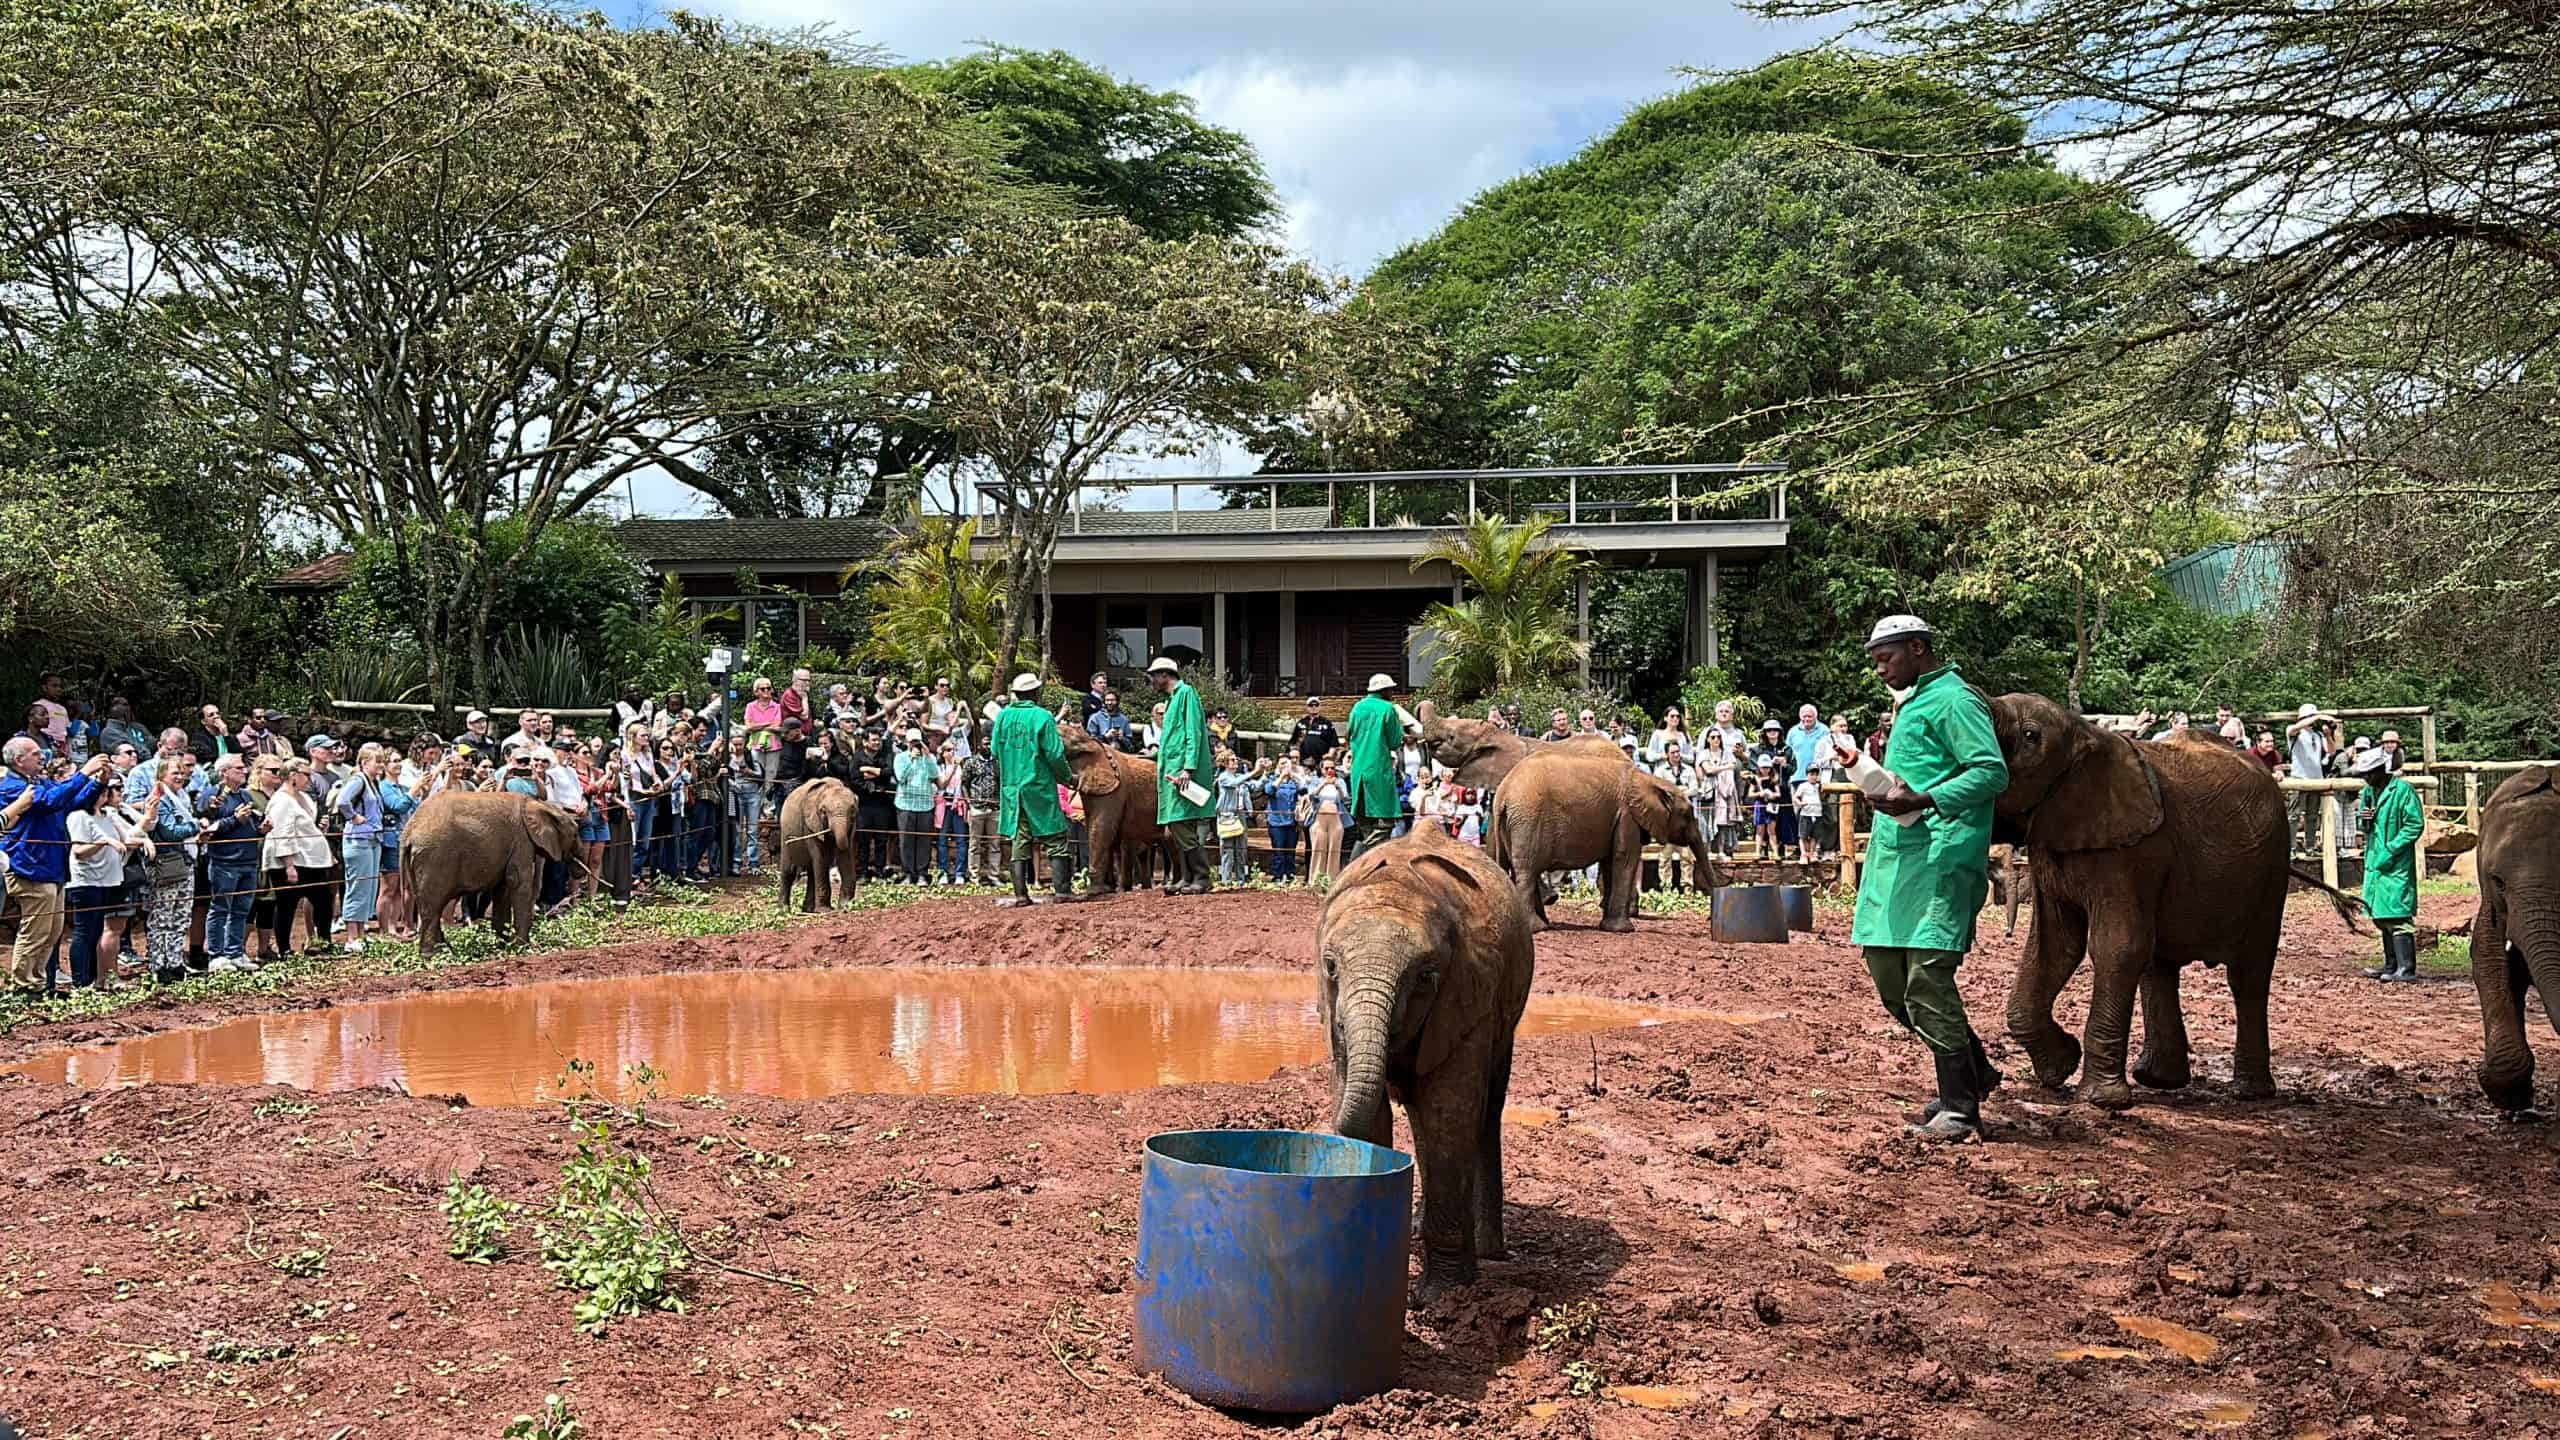 The demonstration area at the elephant orphanage Nairobi